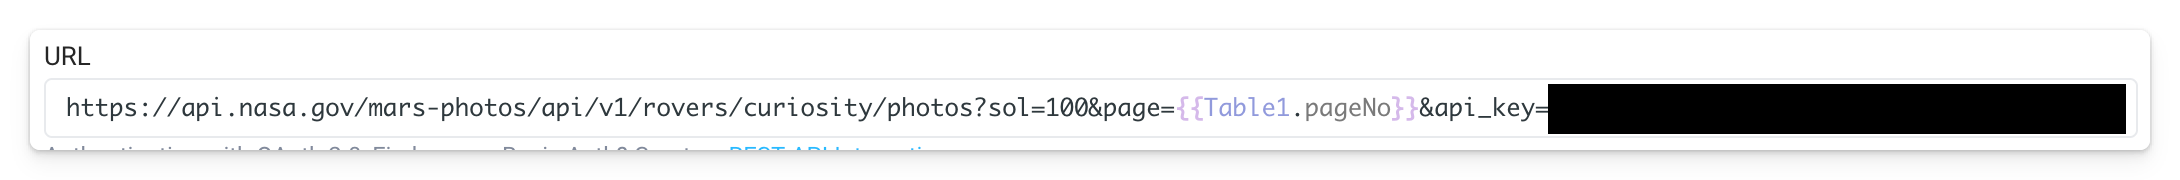 Adding pagination to REST API URL.